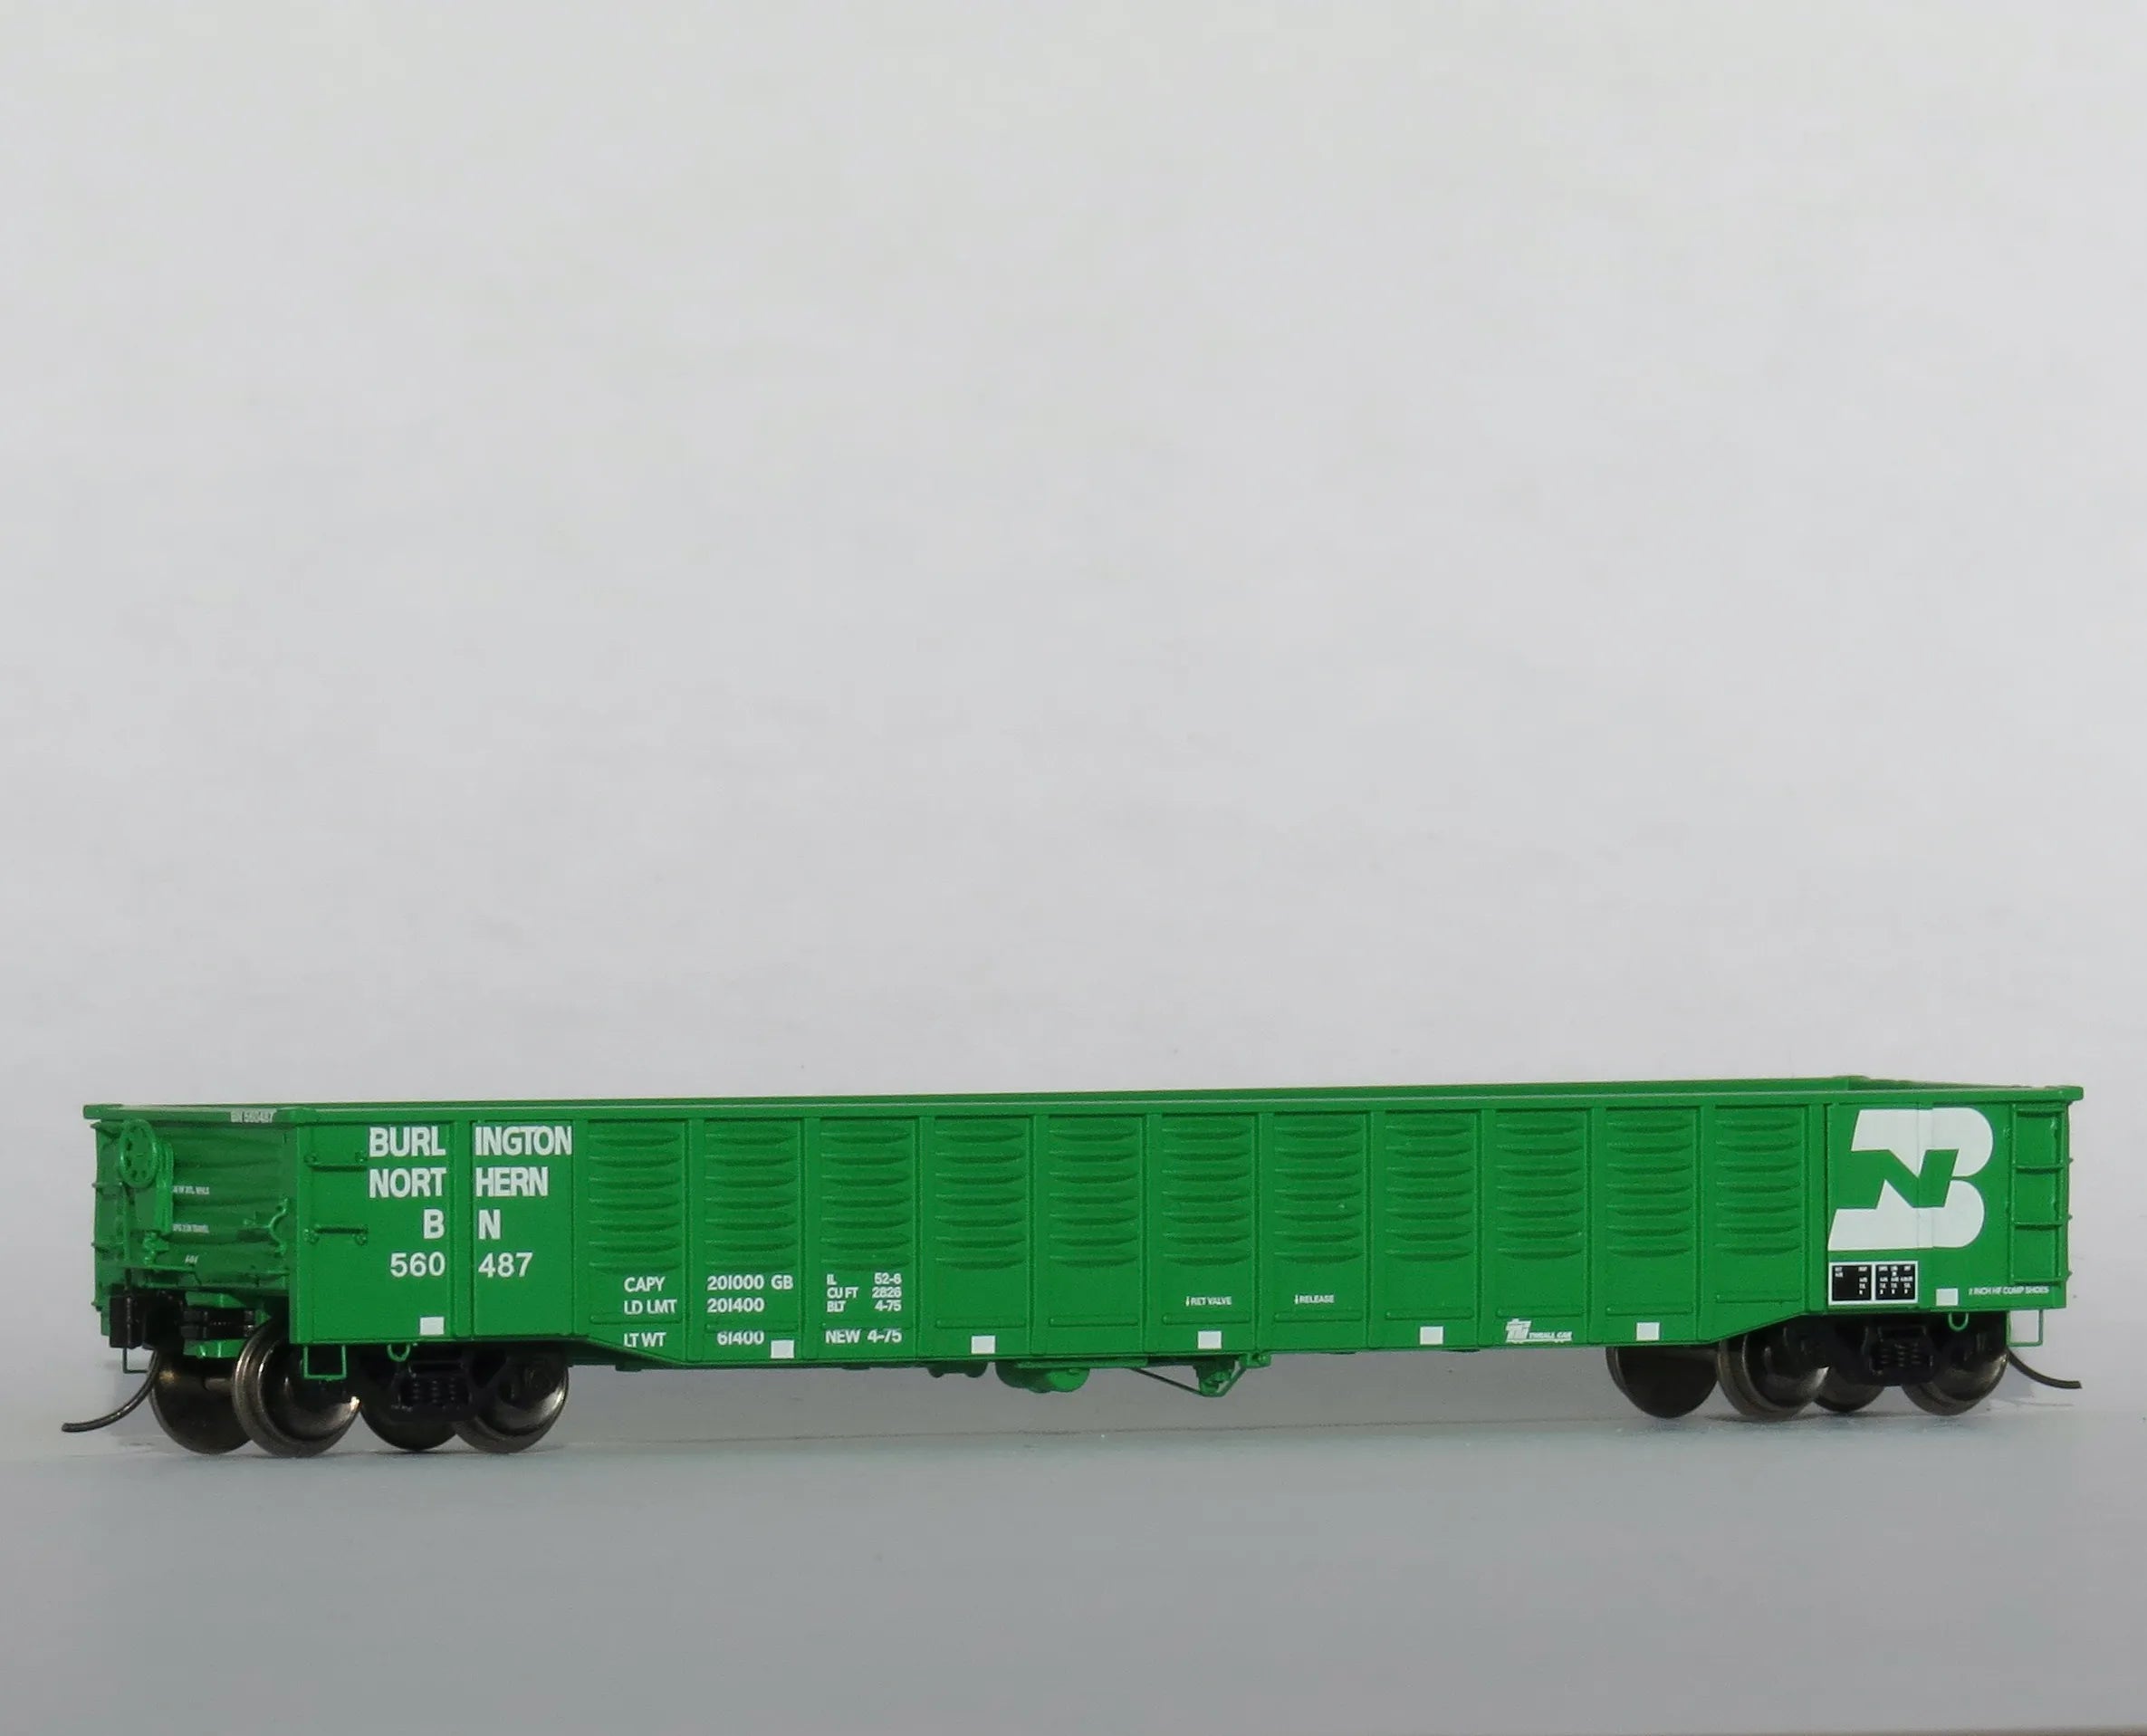 Trainworx 2521124 N Scale, 52' Gondola, Burlington Northern #560835